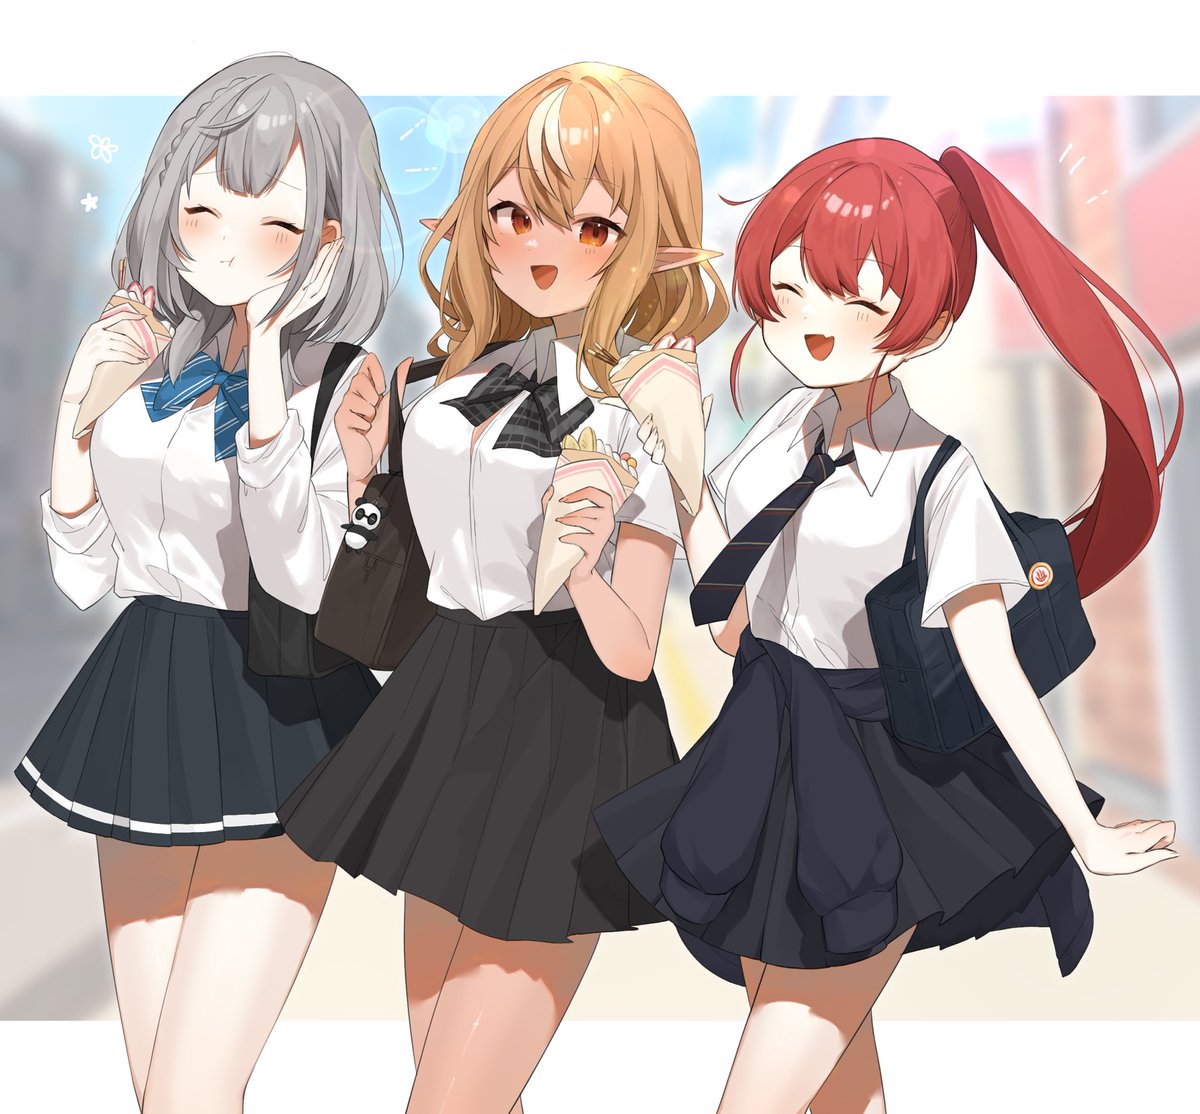 houshou marine ,shiranui flare ,shirogane noel multiple girls 3girls skirt crepe clothes around waist food school uniform  illustration images